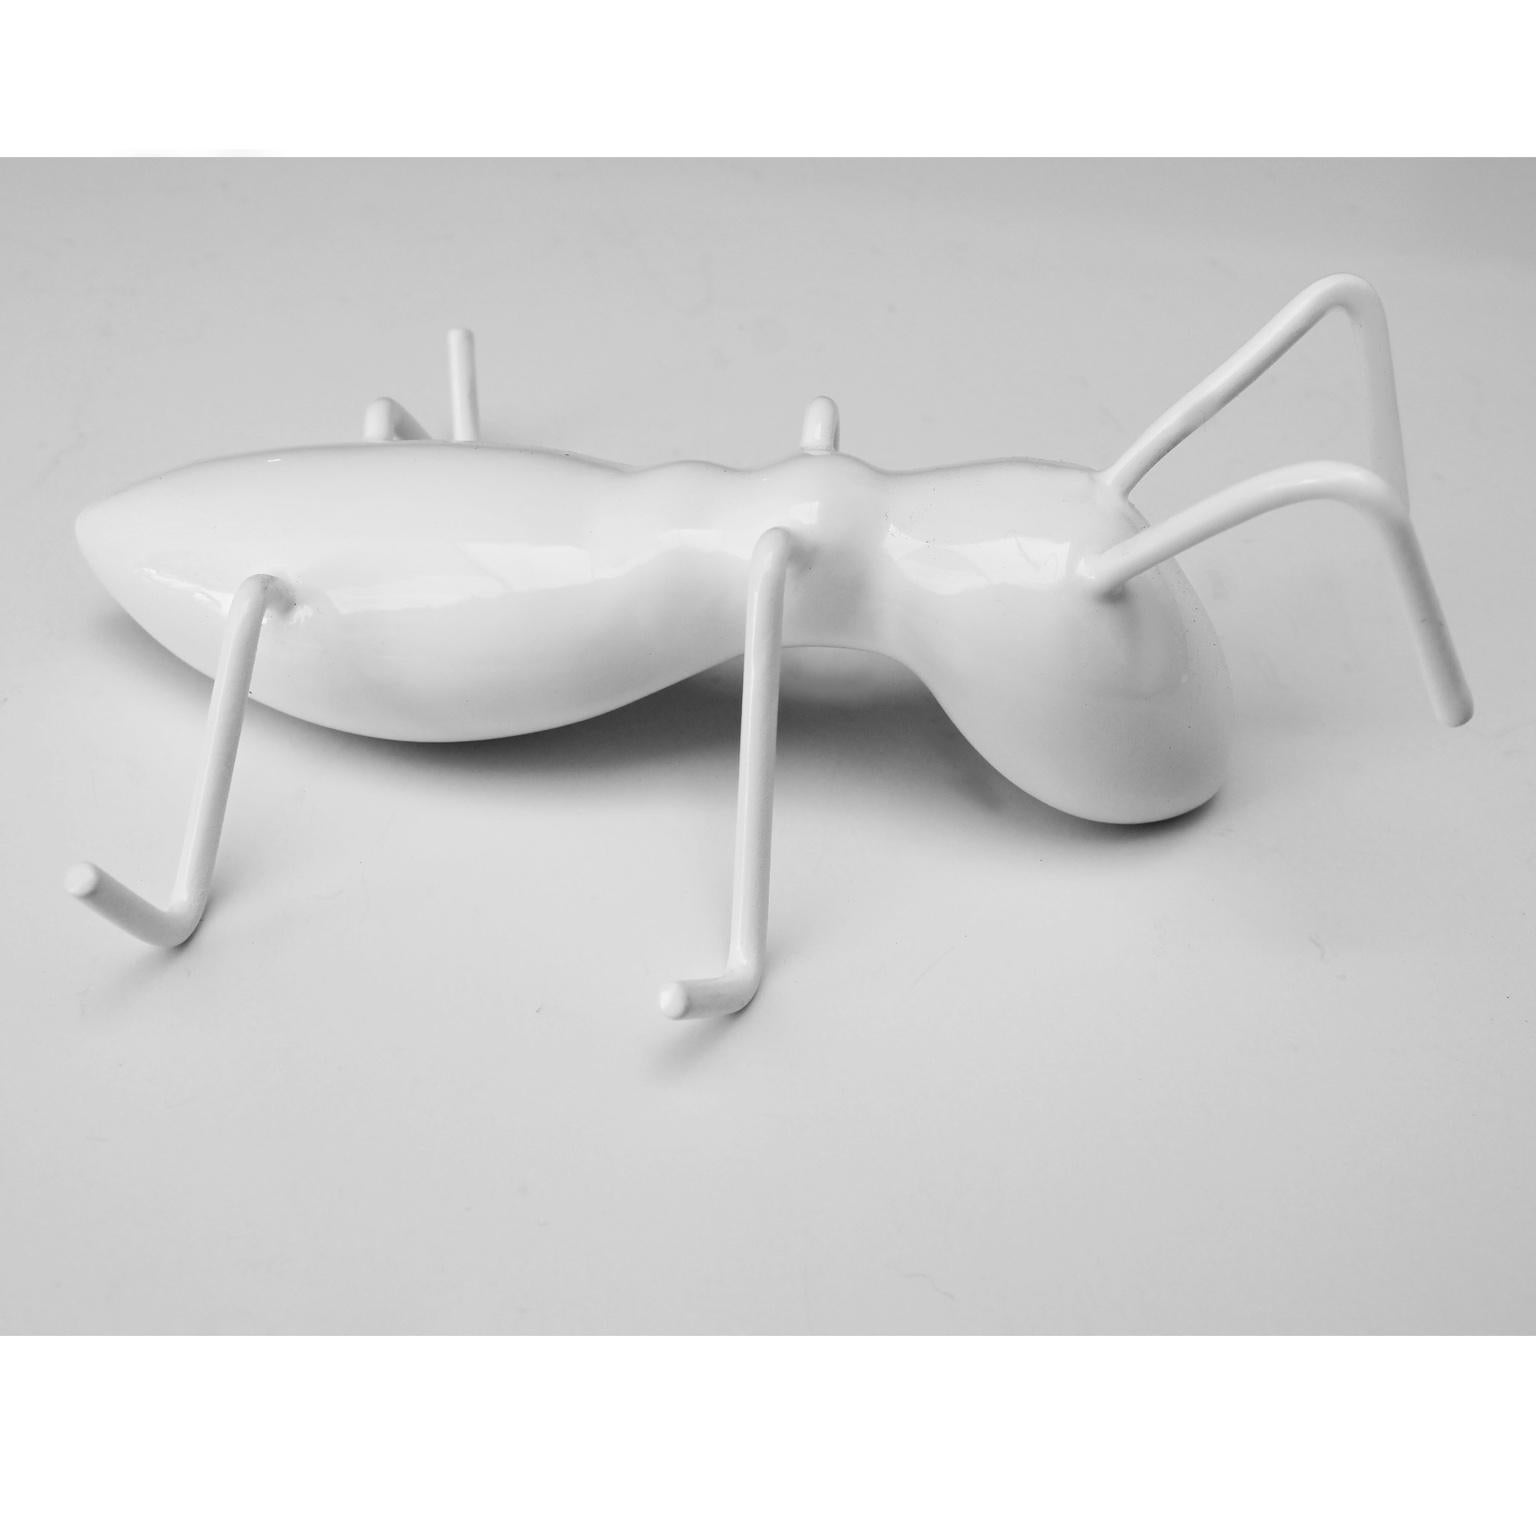 ANT. Tier-/Insekten-Skulptur. 2 kg Bronze Metall. Moderne Kunst (Zeitgenössisch), Sculpture, von Arozarena De La Fuente